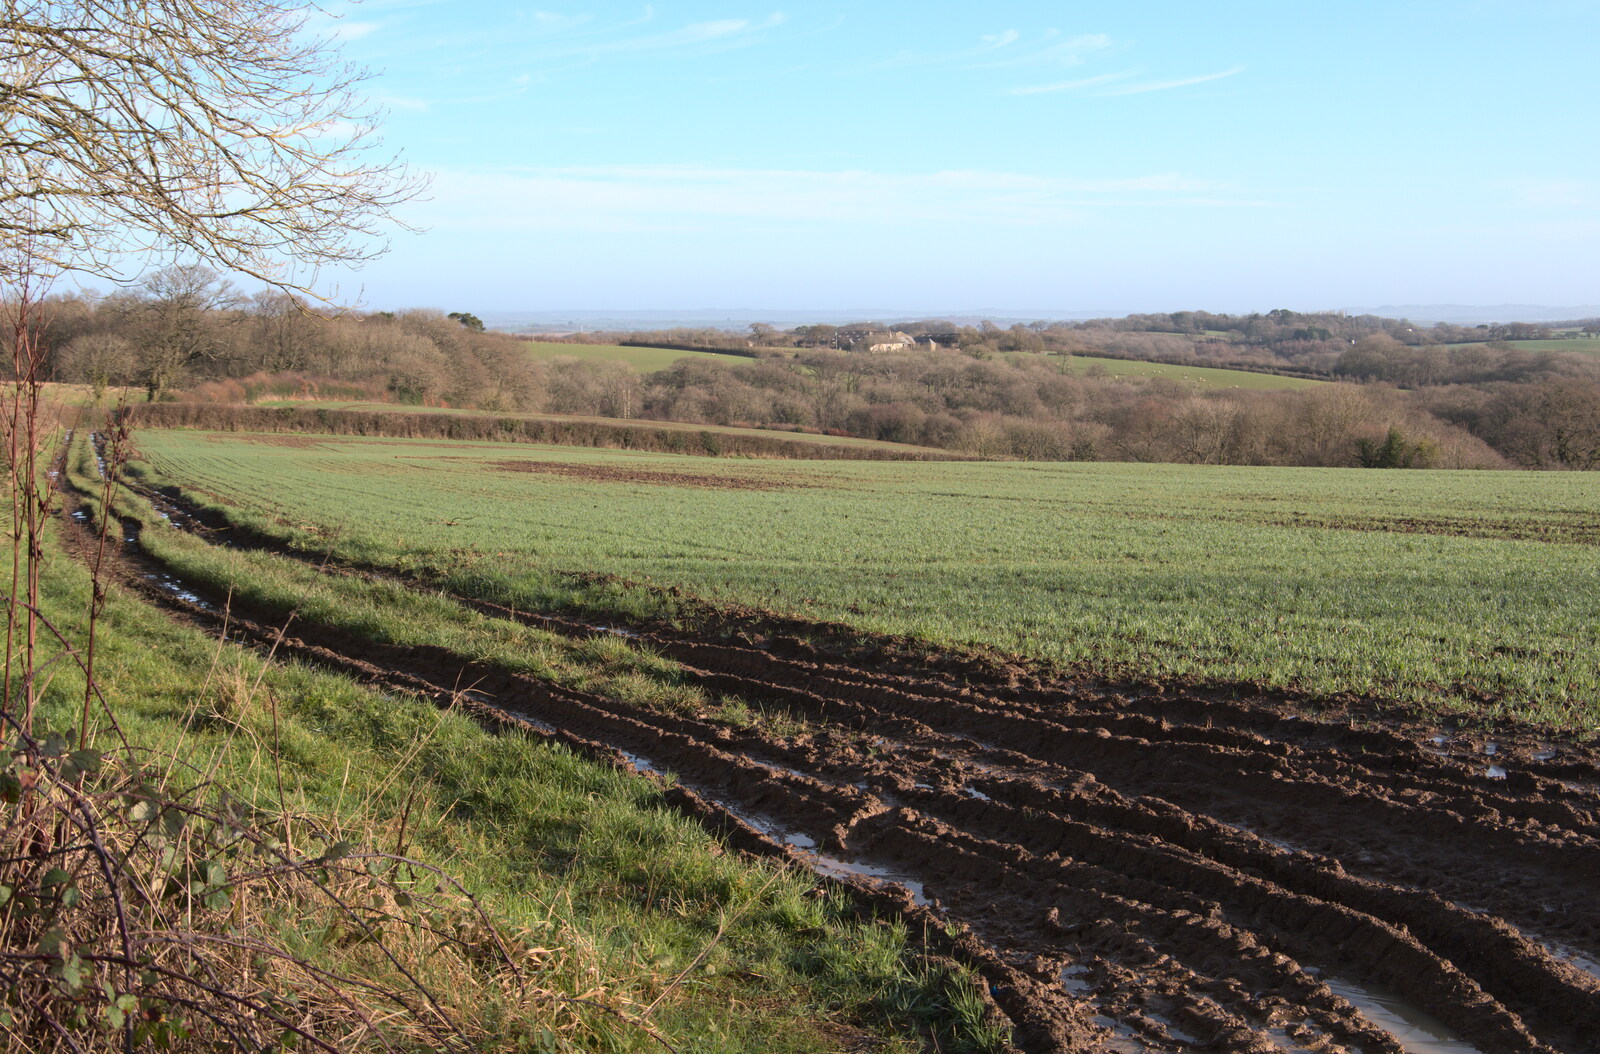 Another Devon field from A Short Trip to Spreyton, Devon - 18th January 2020